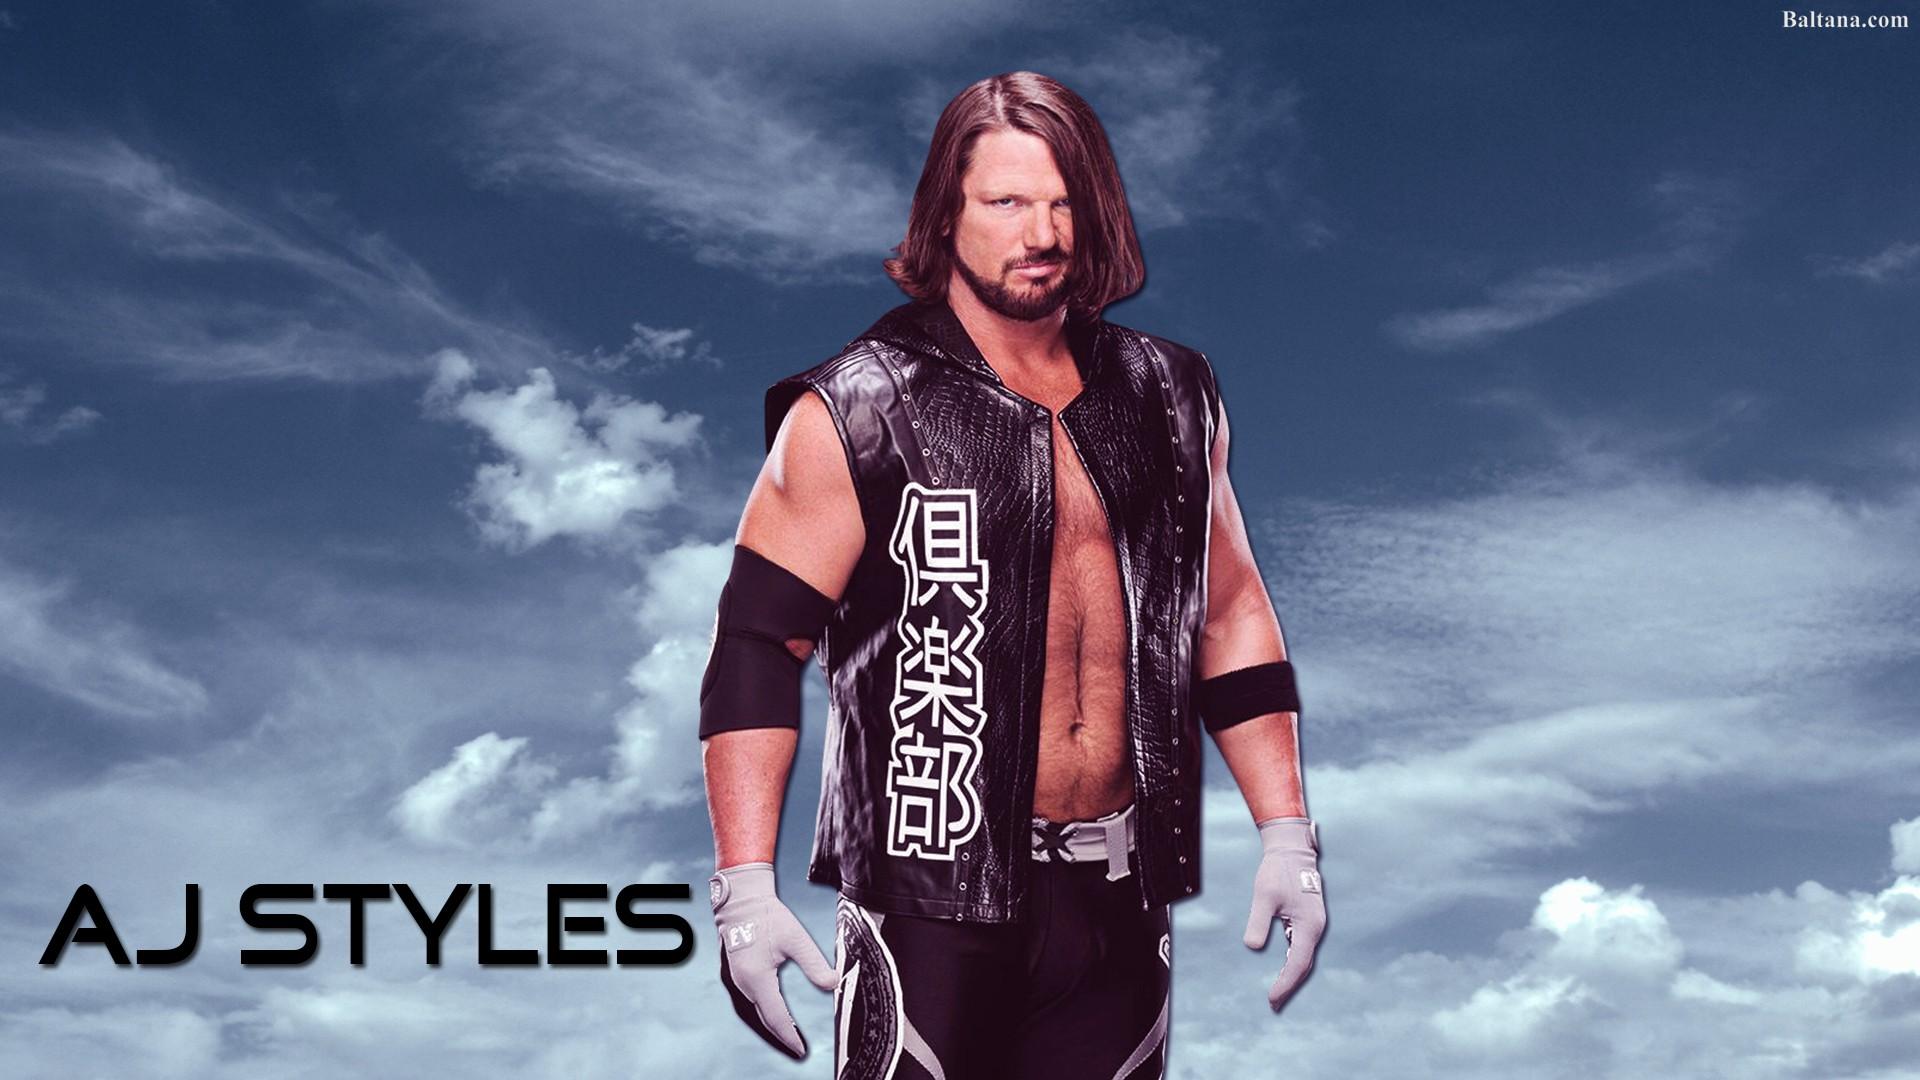 The Phenomenal One AJ Styles Survivor Series win-loss record